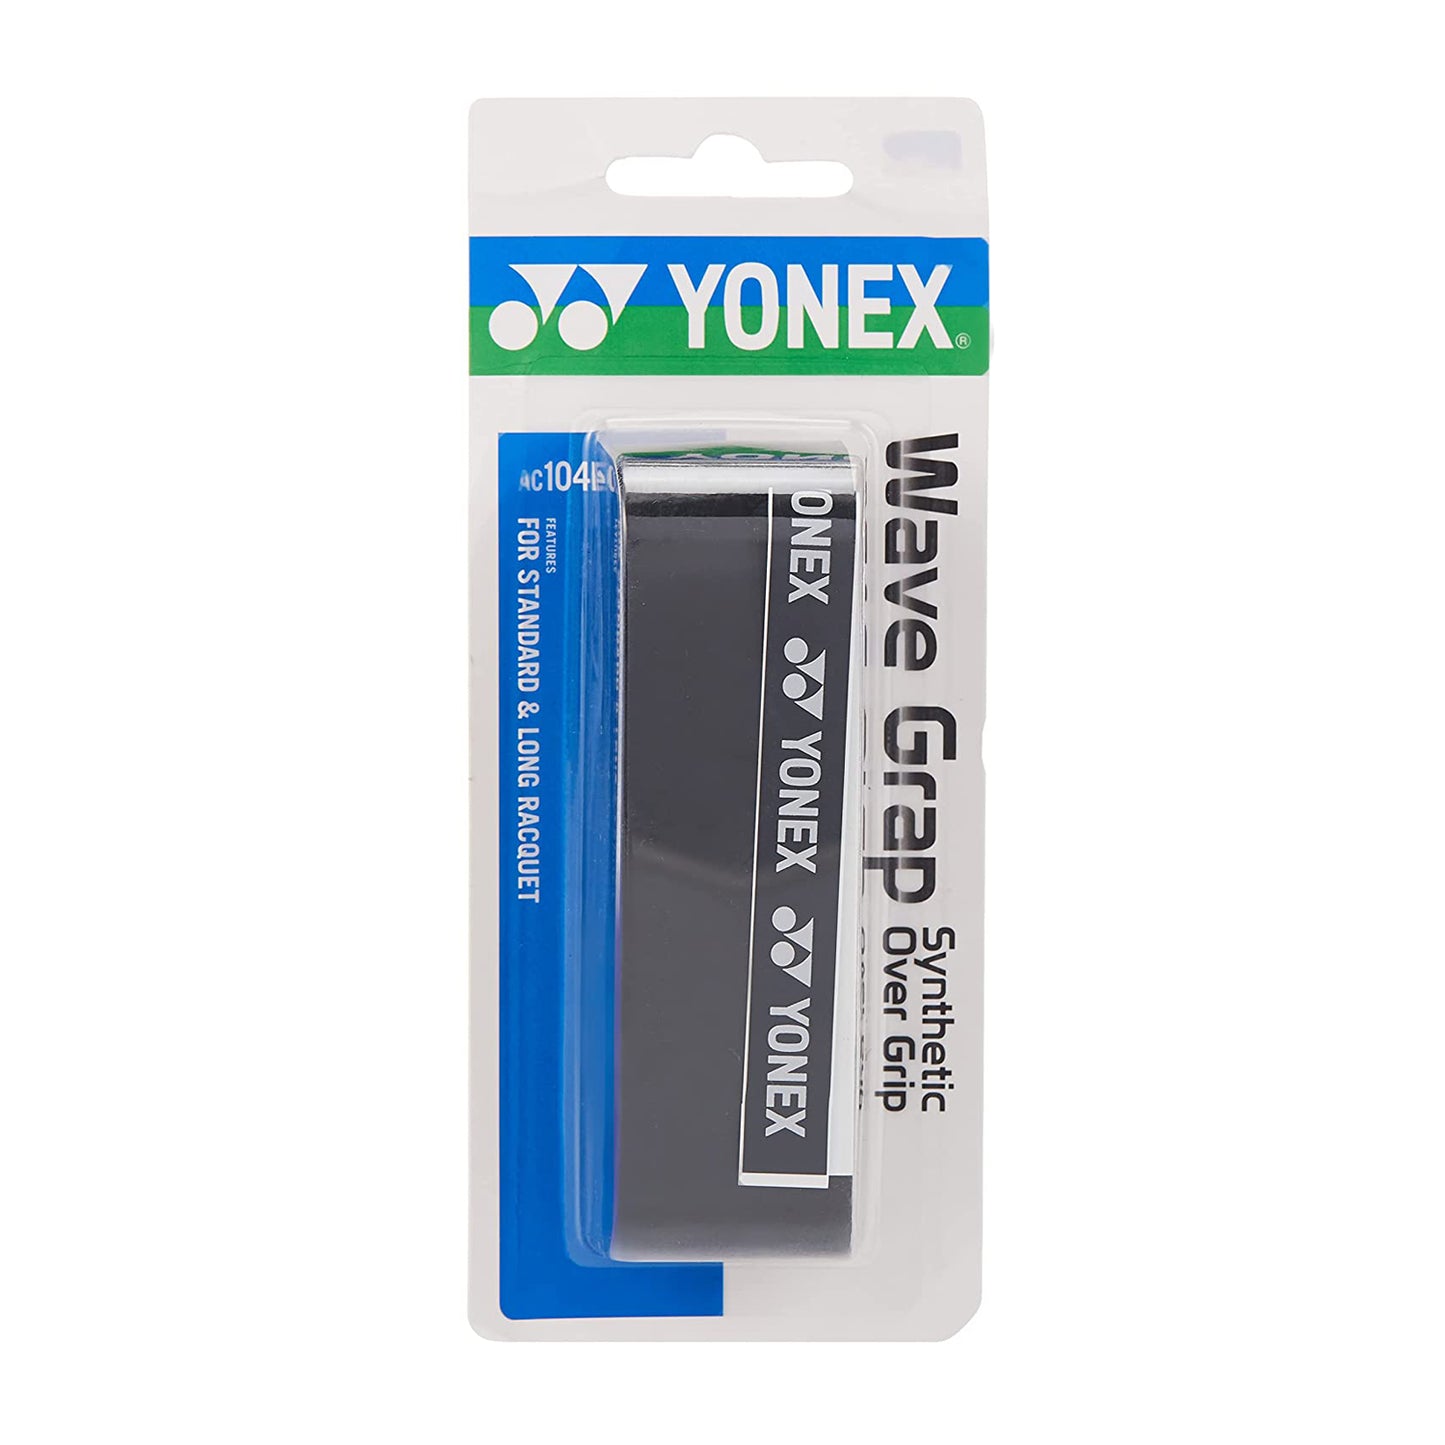 Yonex AC 104 EX Wave Grap Badminton Grip Tape - Black (1 Pc) - Best Price online Prokicksports.com